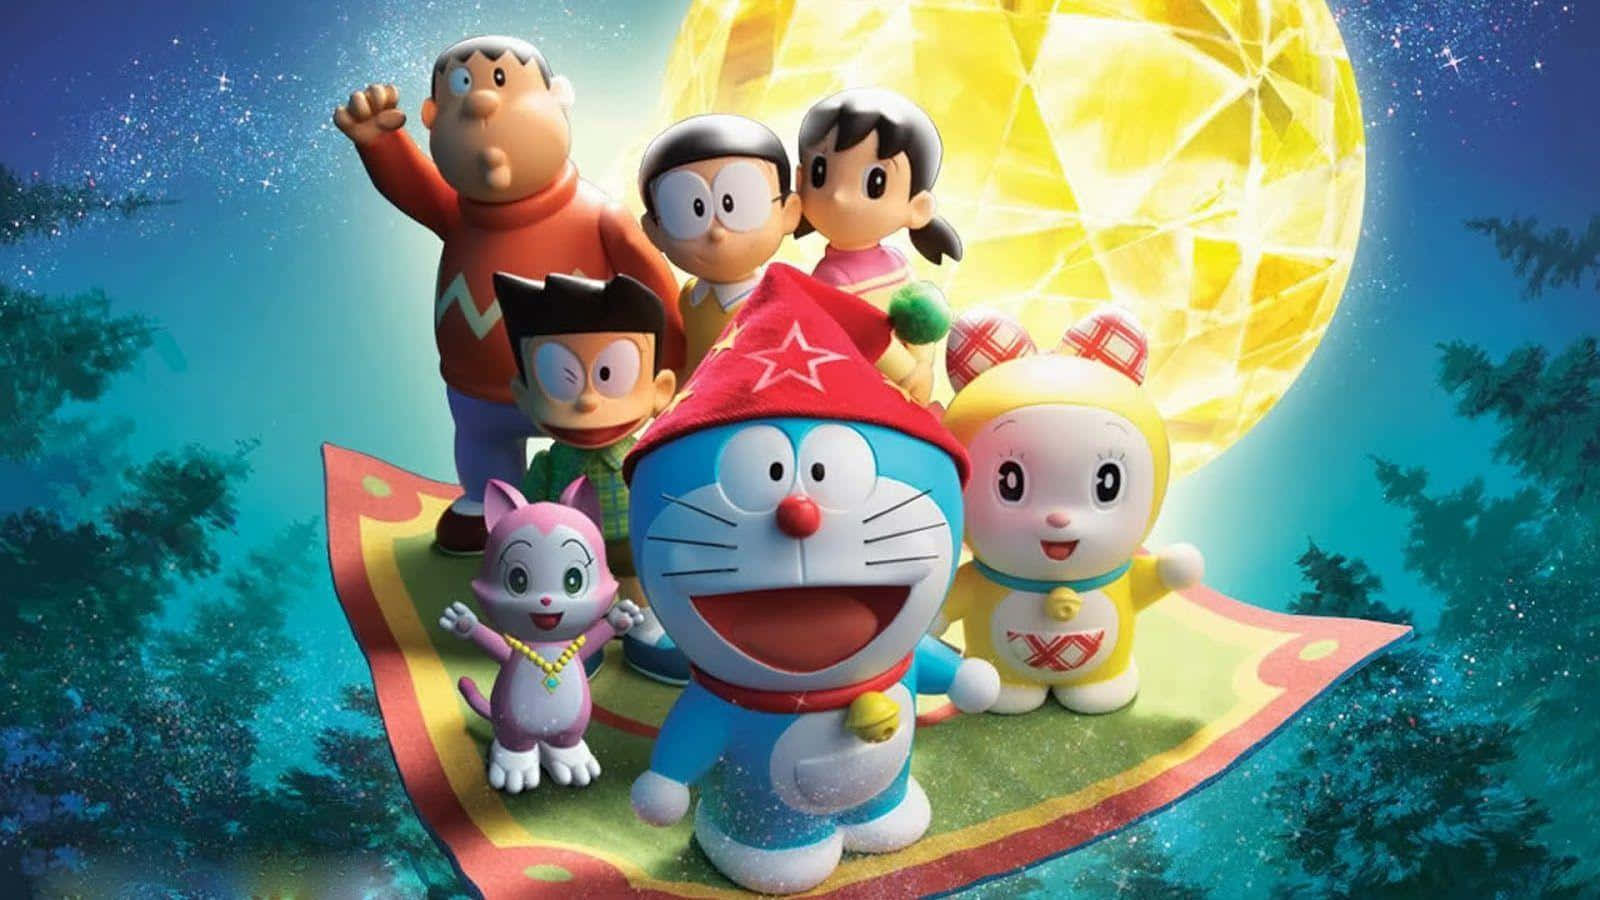 Doraemon brings life lessons through his warm hearted creativity.